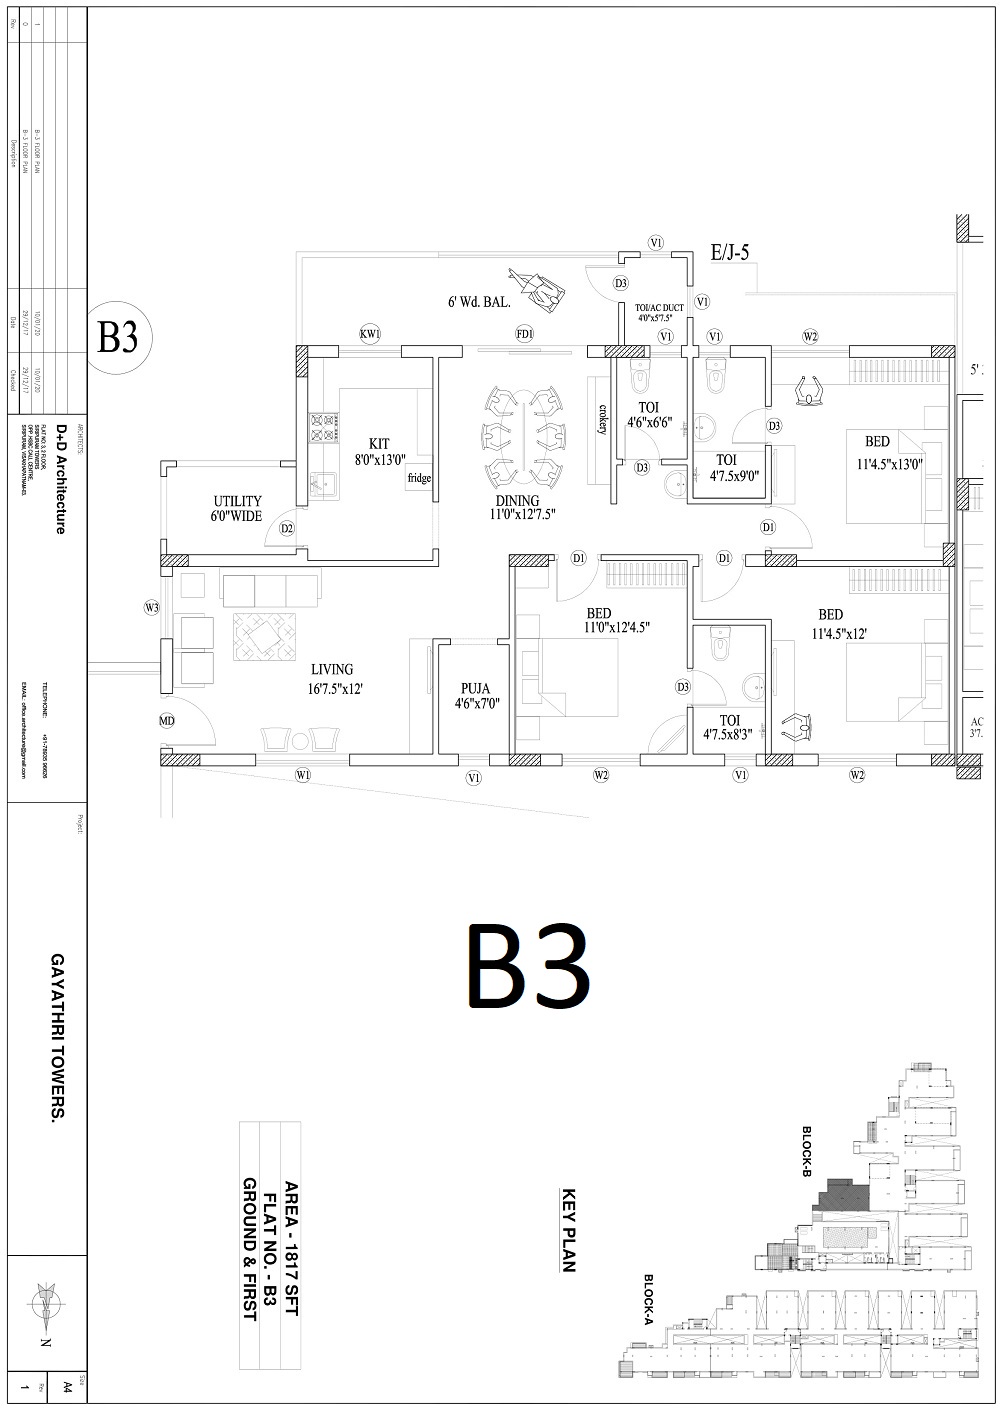 B3 - Floor Plan